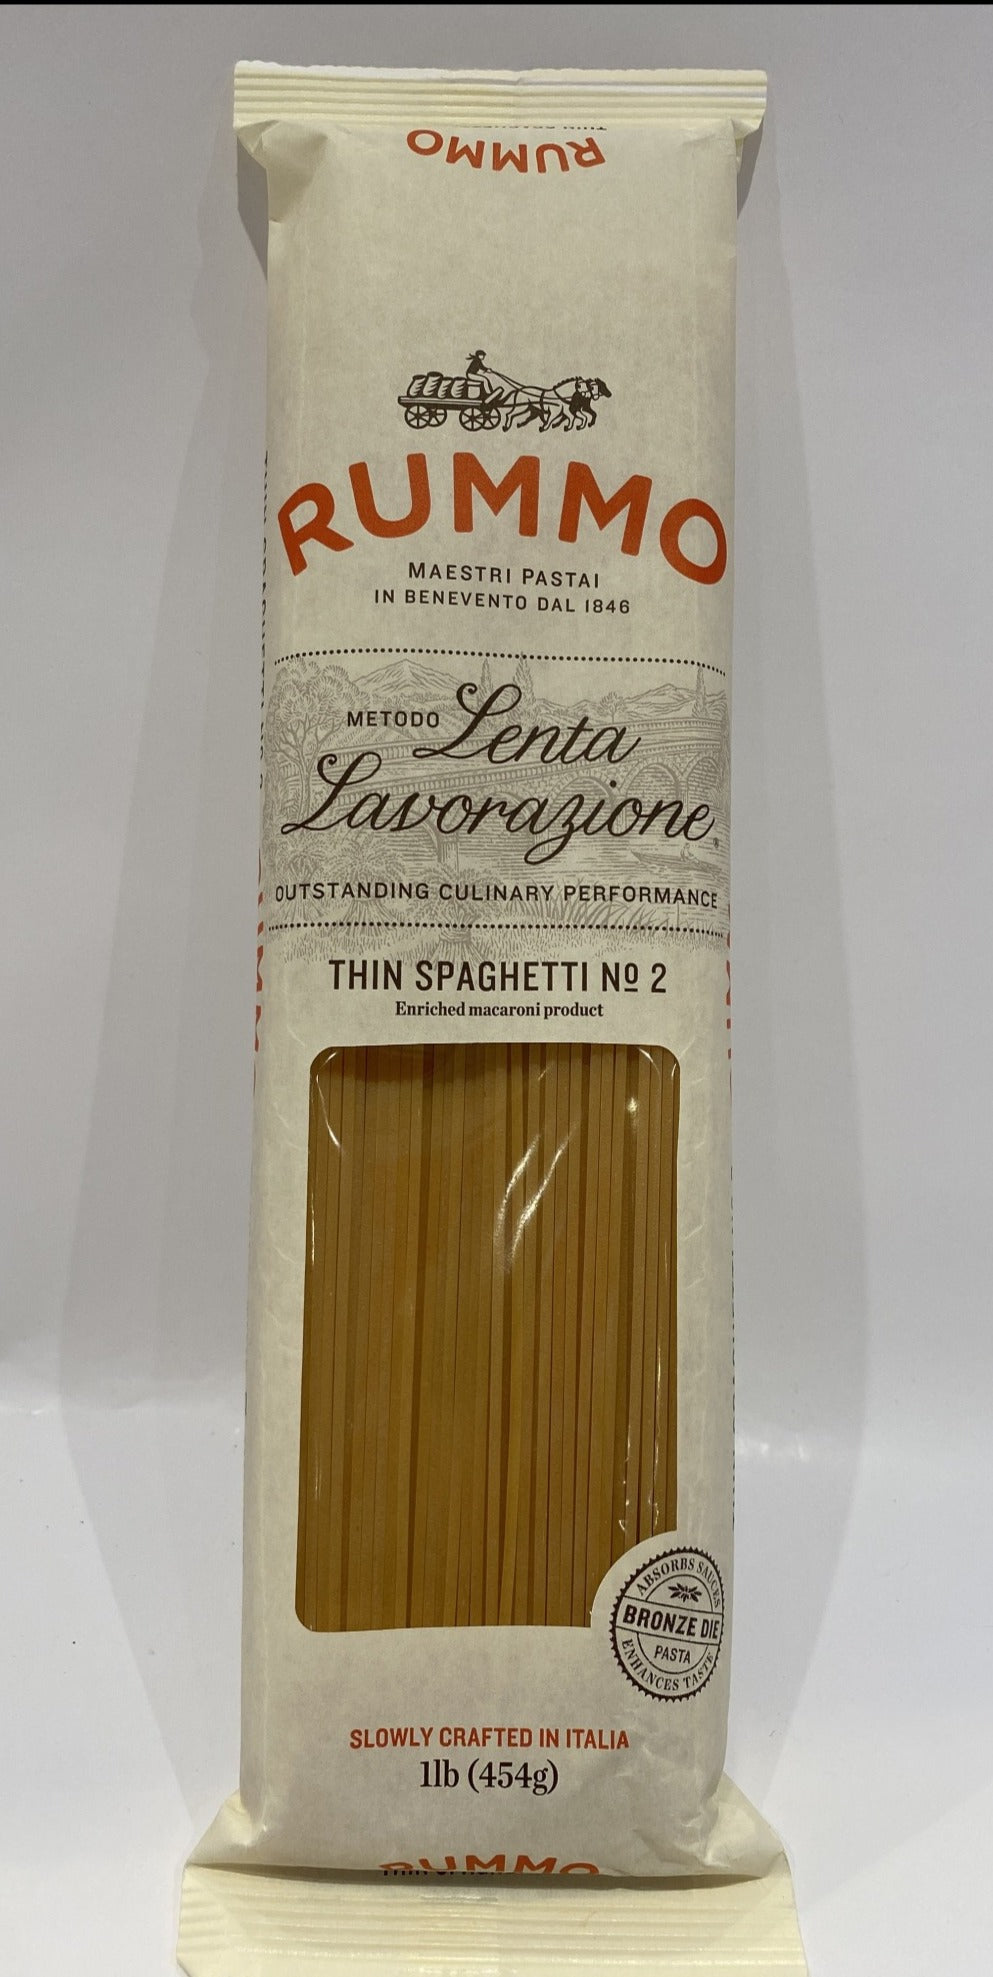 Rummo - Thin Spaghetti #2 Pasta - 454g (16 oz)